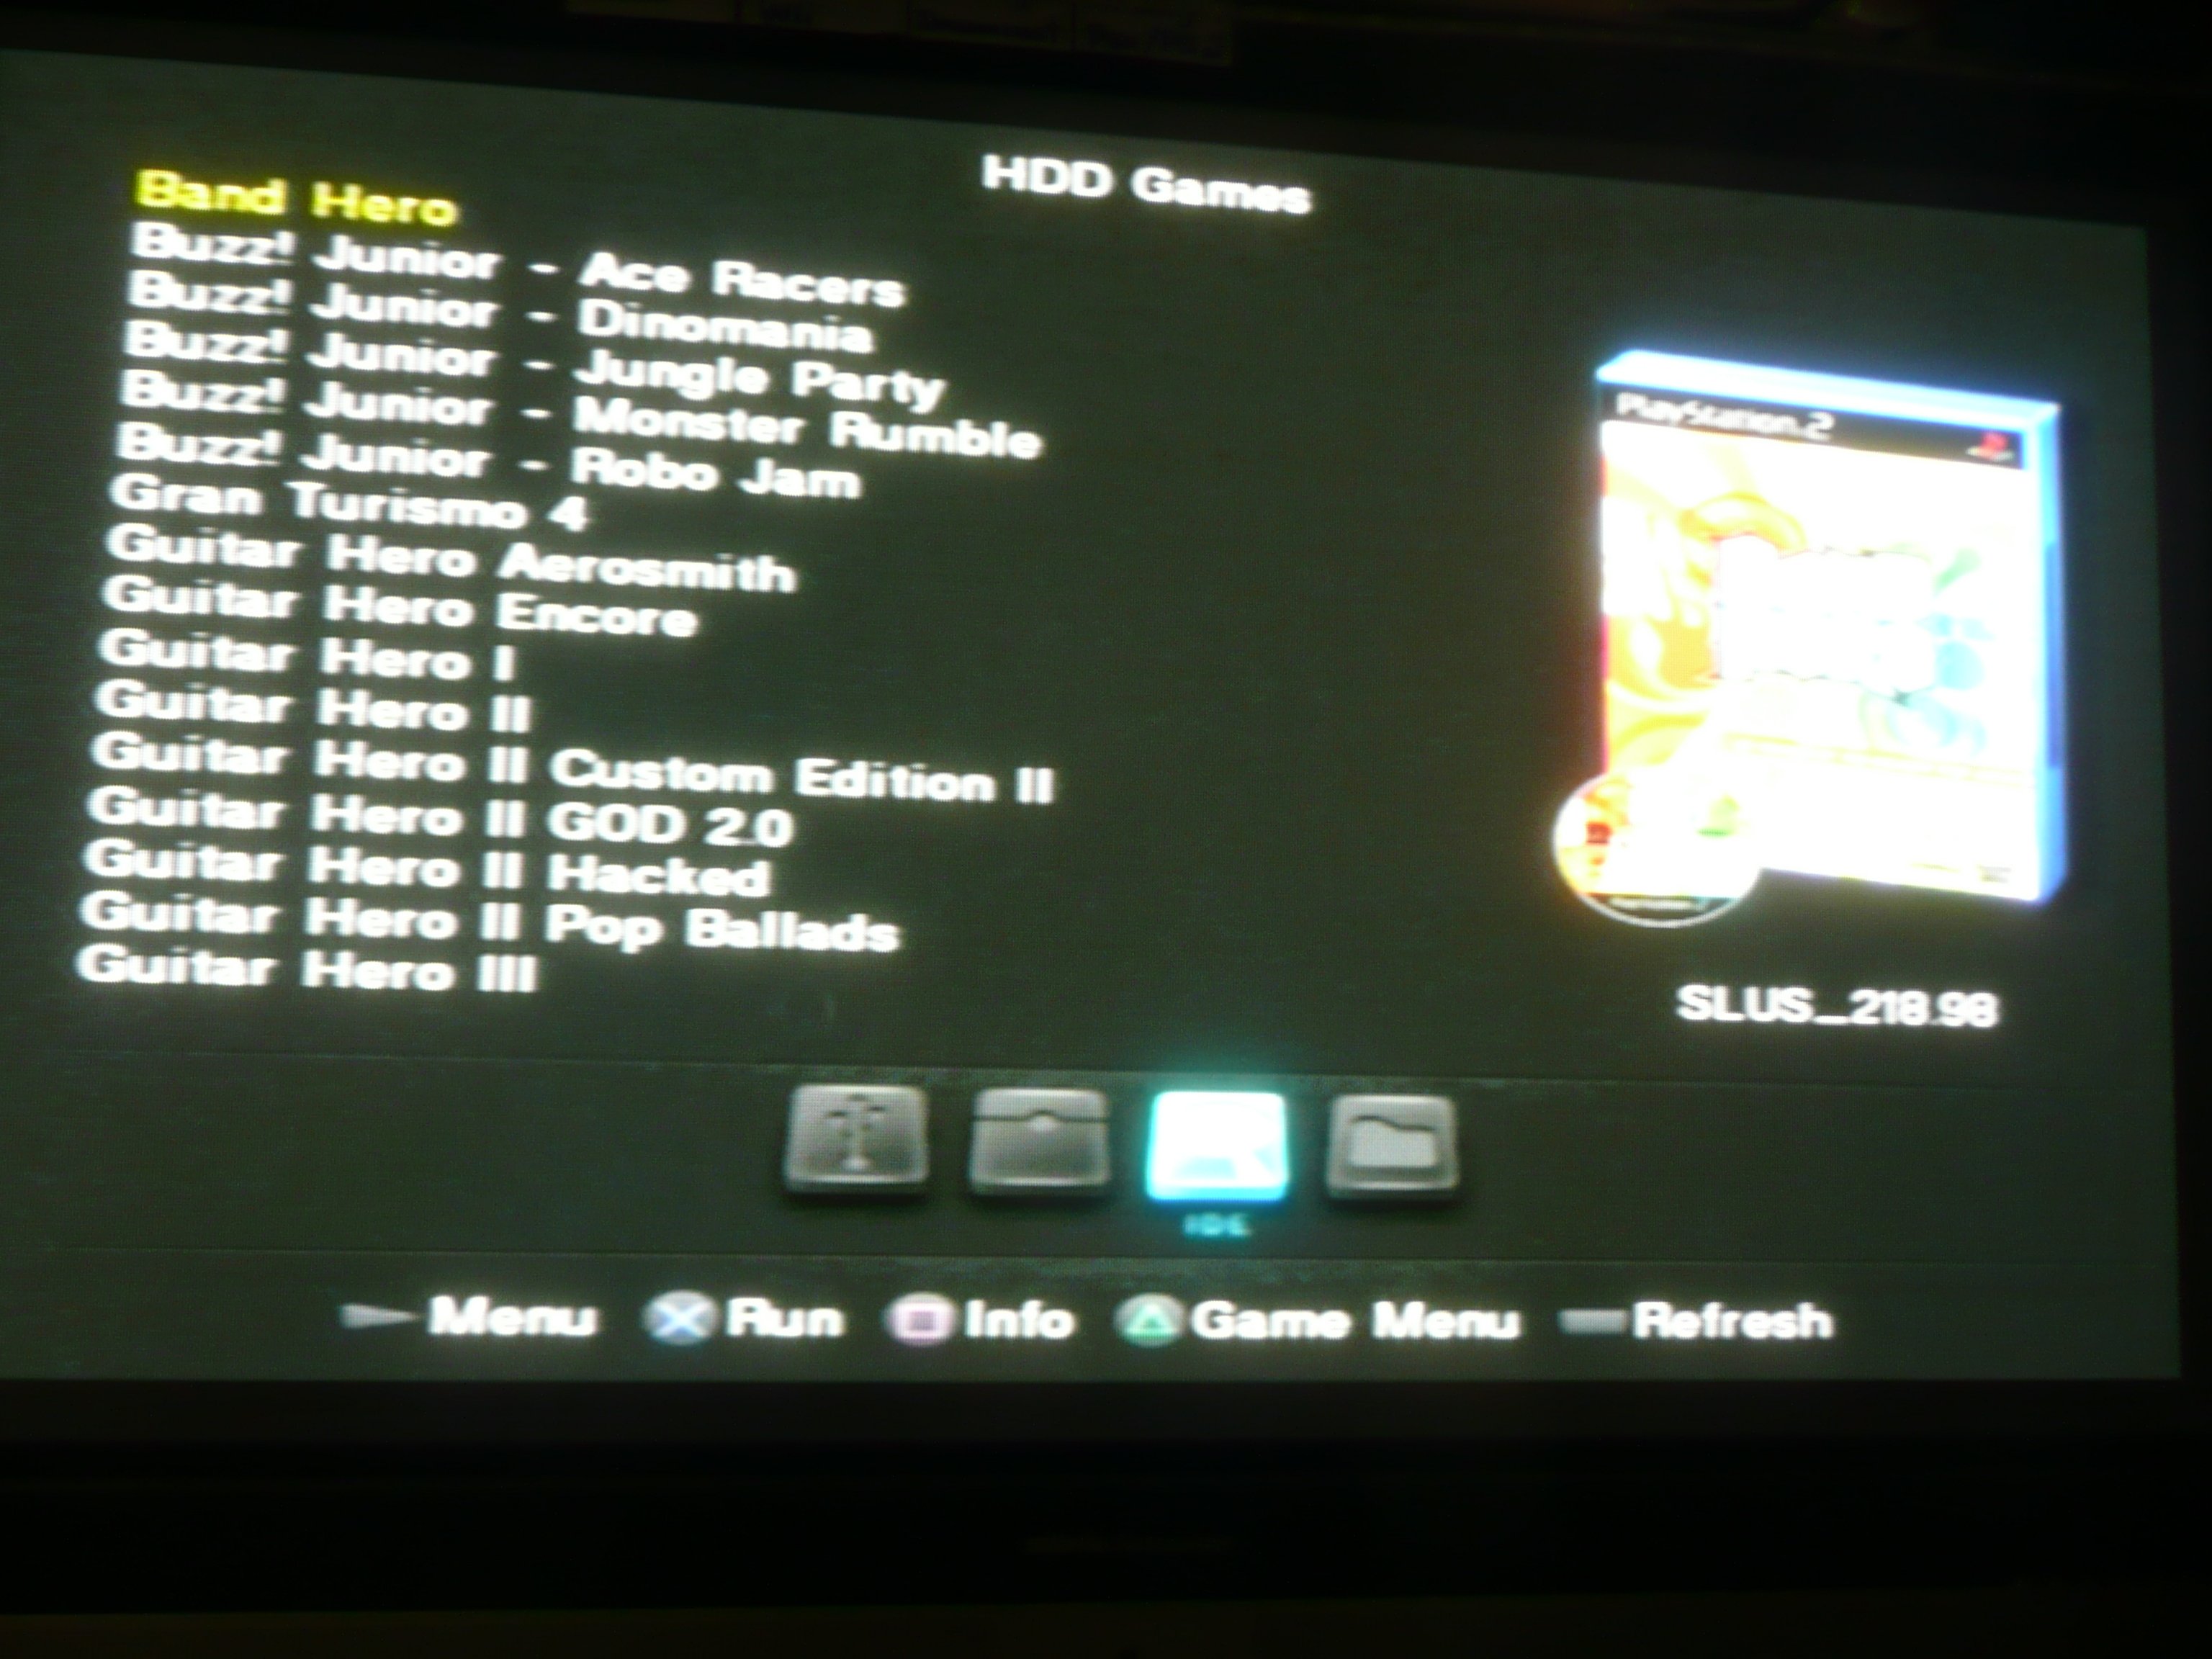 Open PS2 Loader Updated to 1.1.0 - Hackinformer